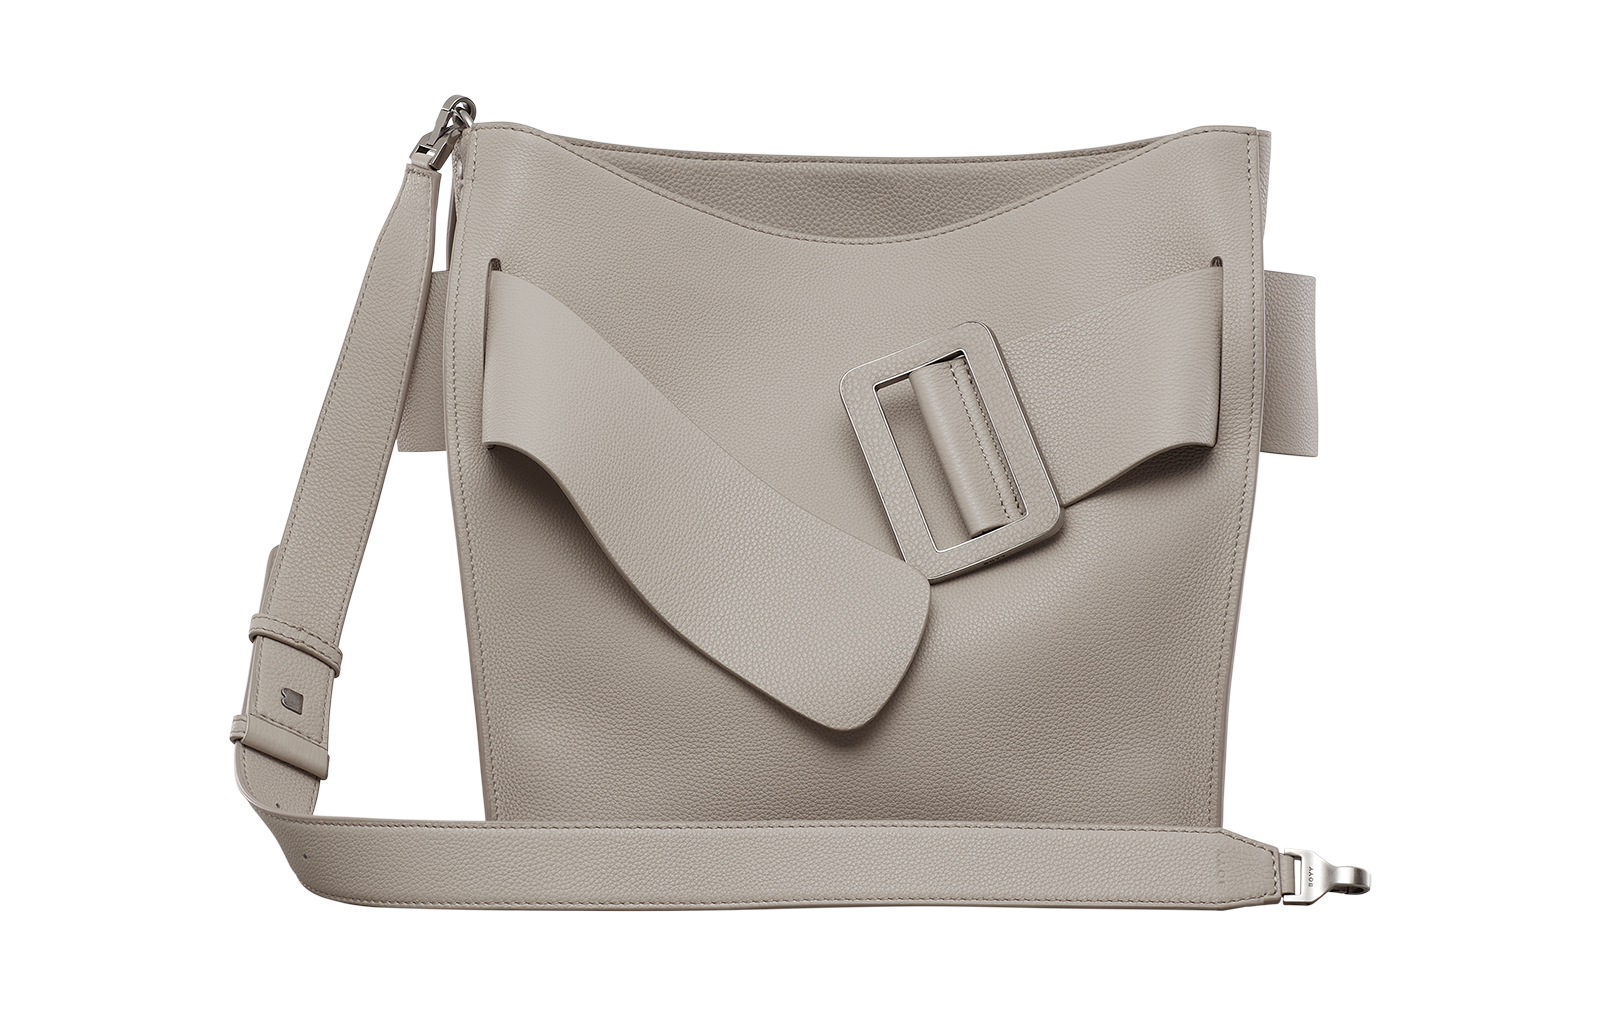 Buy Lavie DEVON Women's Shoulder bag with No (OLIVE) at Amazon.in